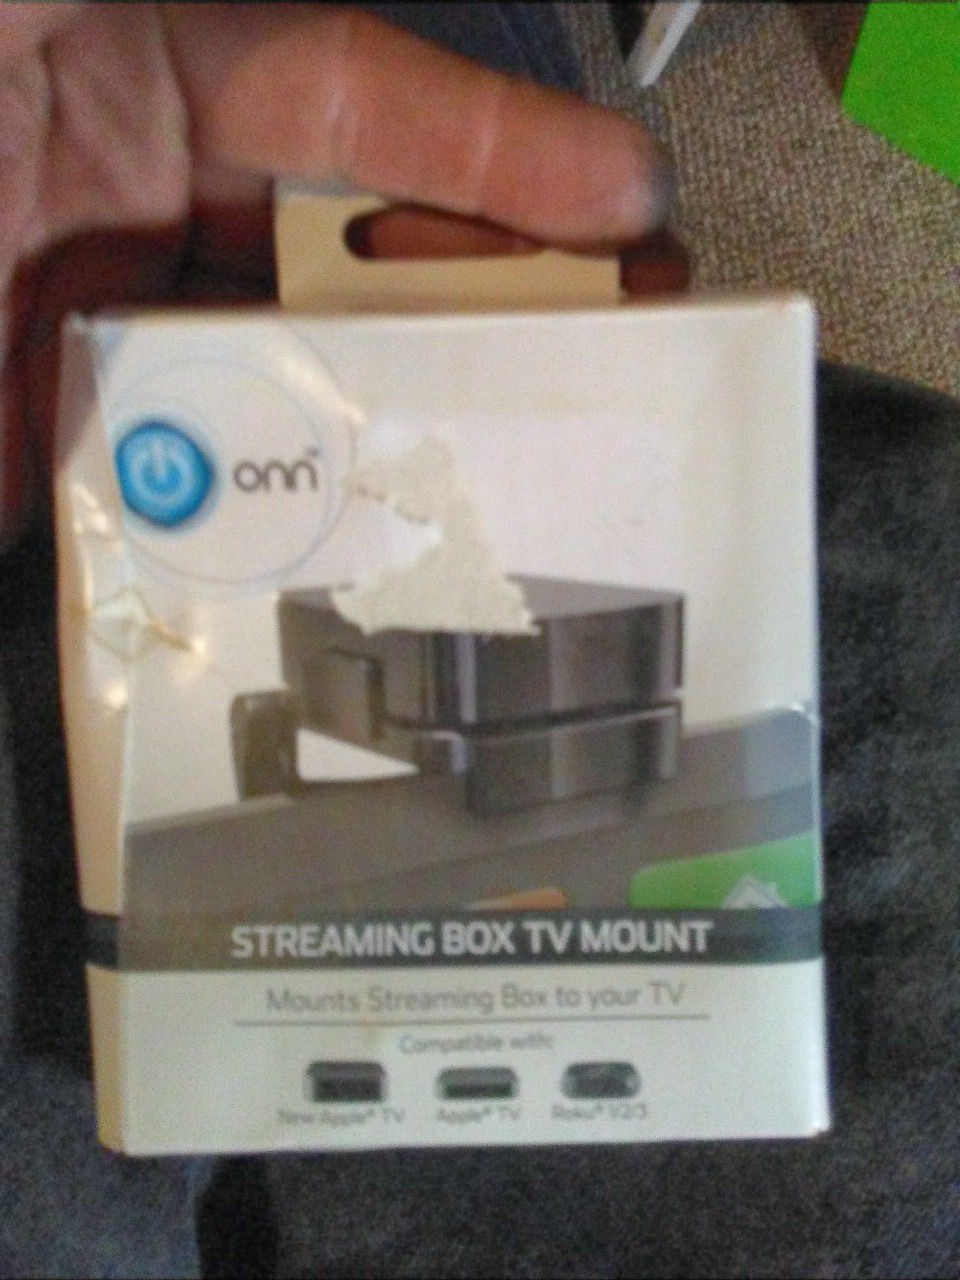 Onn streaming box TV mount